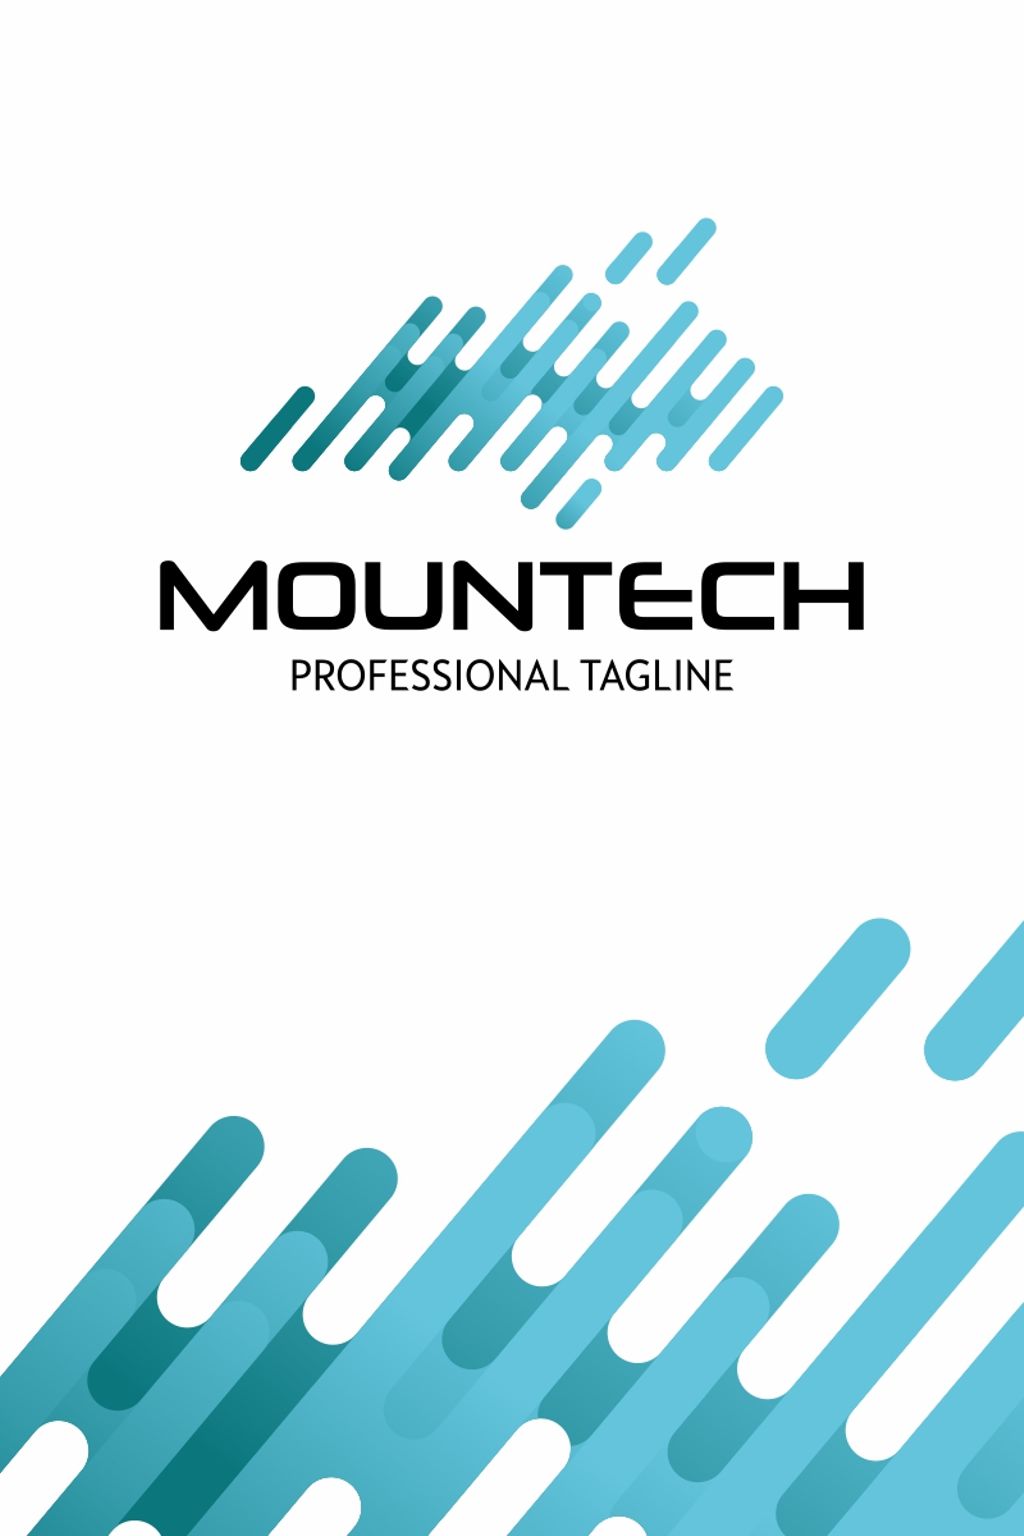 Mountech - Logo Template